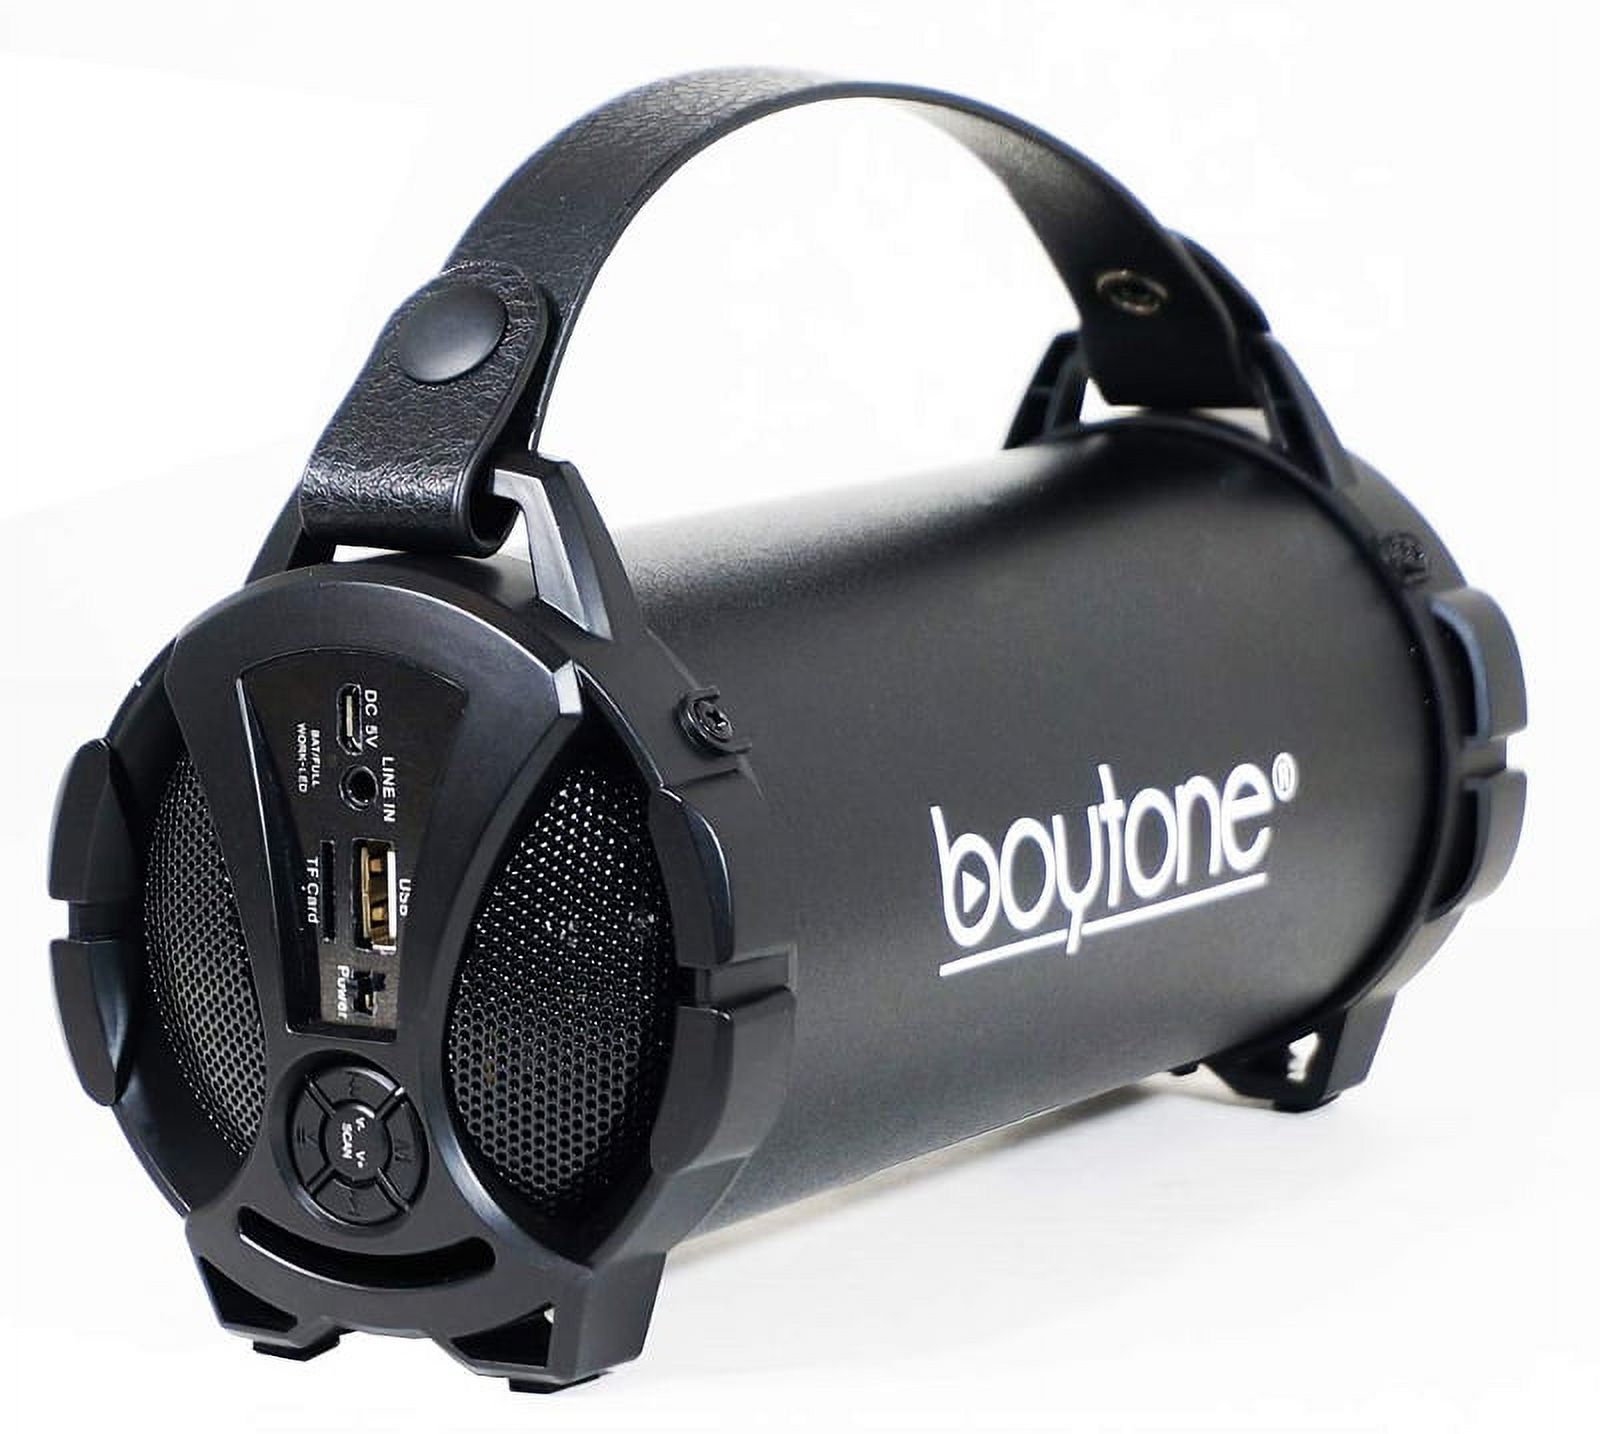 Boytone BT-38BK Portable Bluetooth Indoor/Outdoor Speaker - Black - image 1 of 3